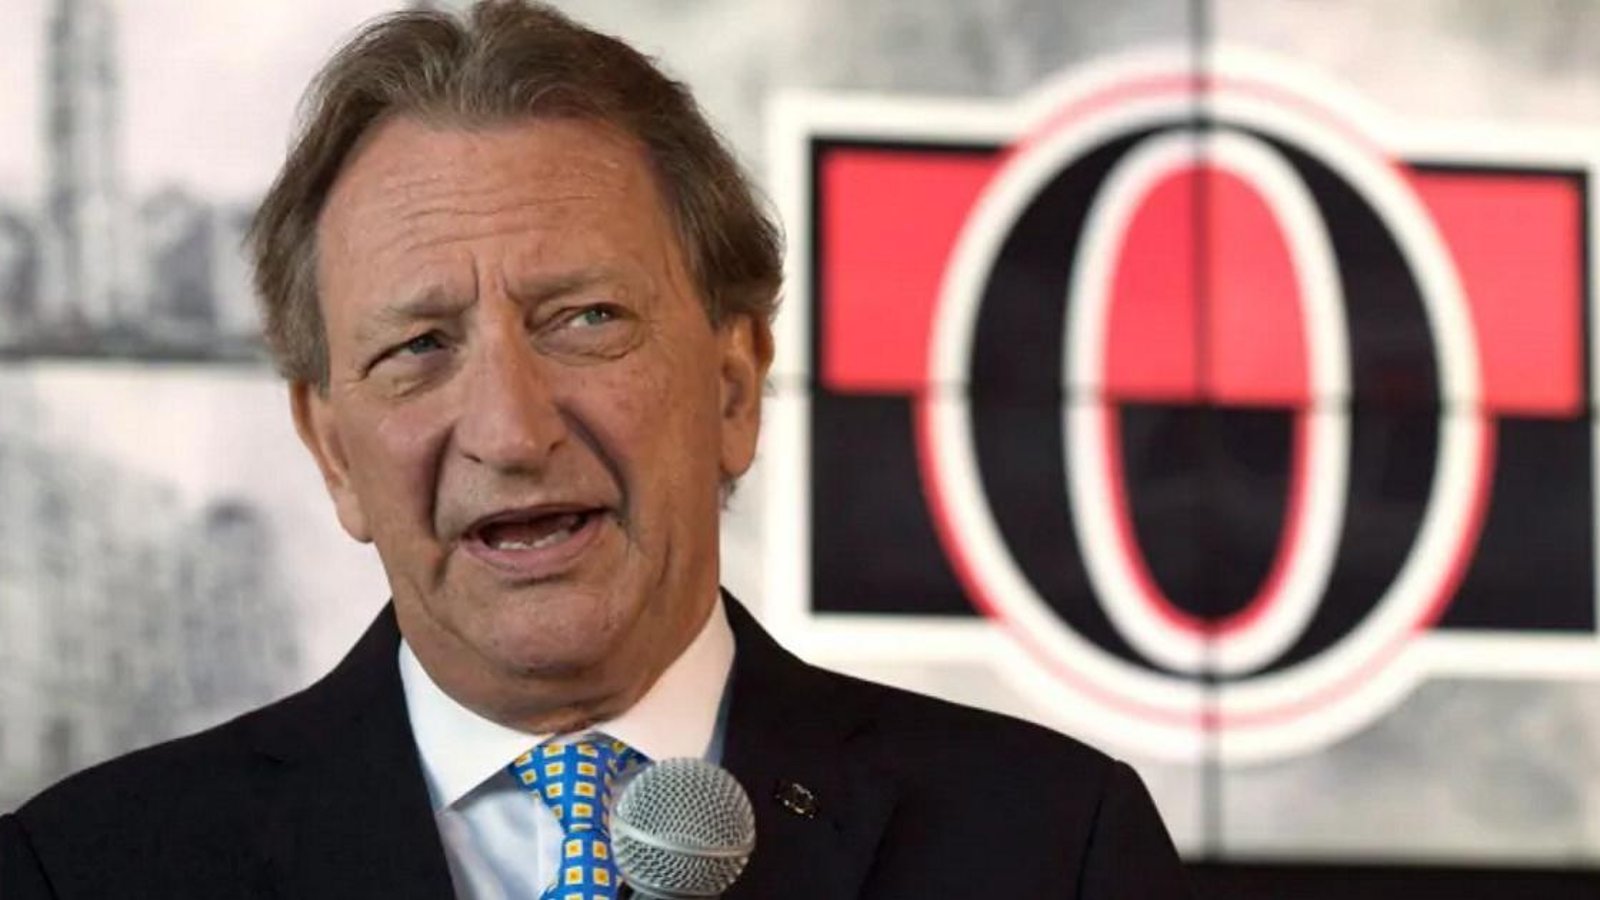 Ottawa Senators owner Eugene Melnyk at the center of another embarrassing scandal.